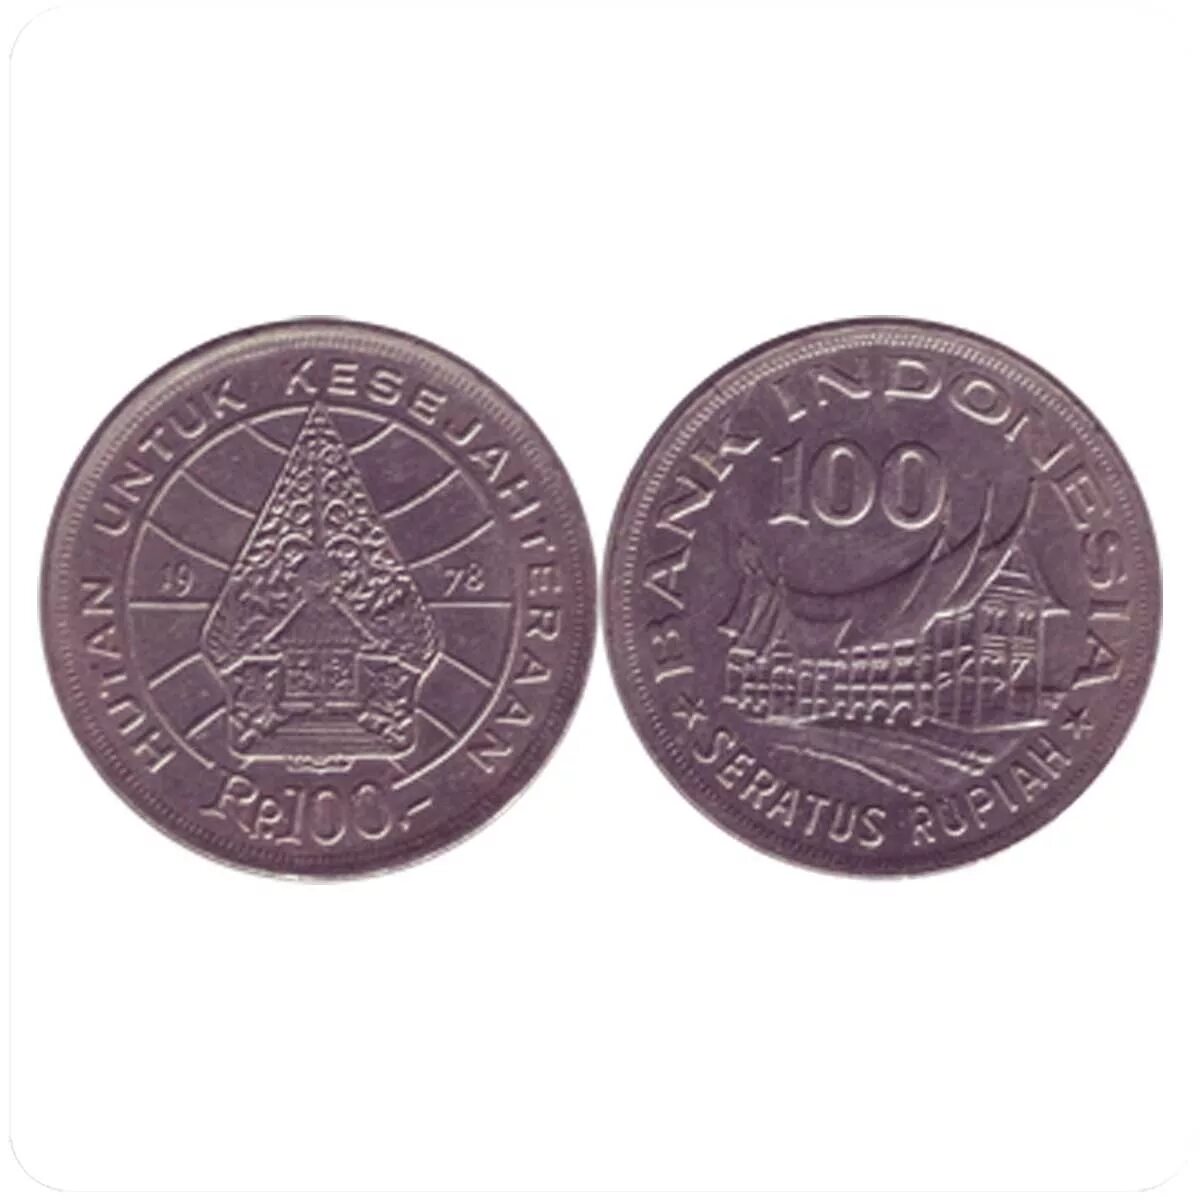 Курс рупий бали. Рупия Индонезии. Монеты Индонезии. Индонезийская рупия монеты. Монеты Бали.